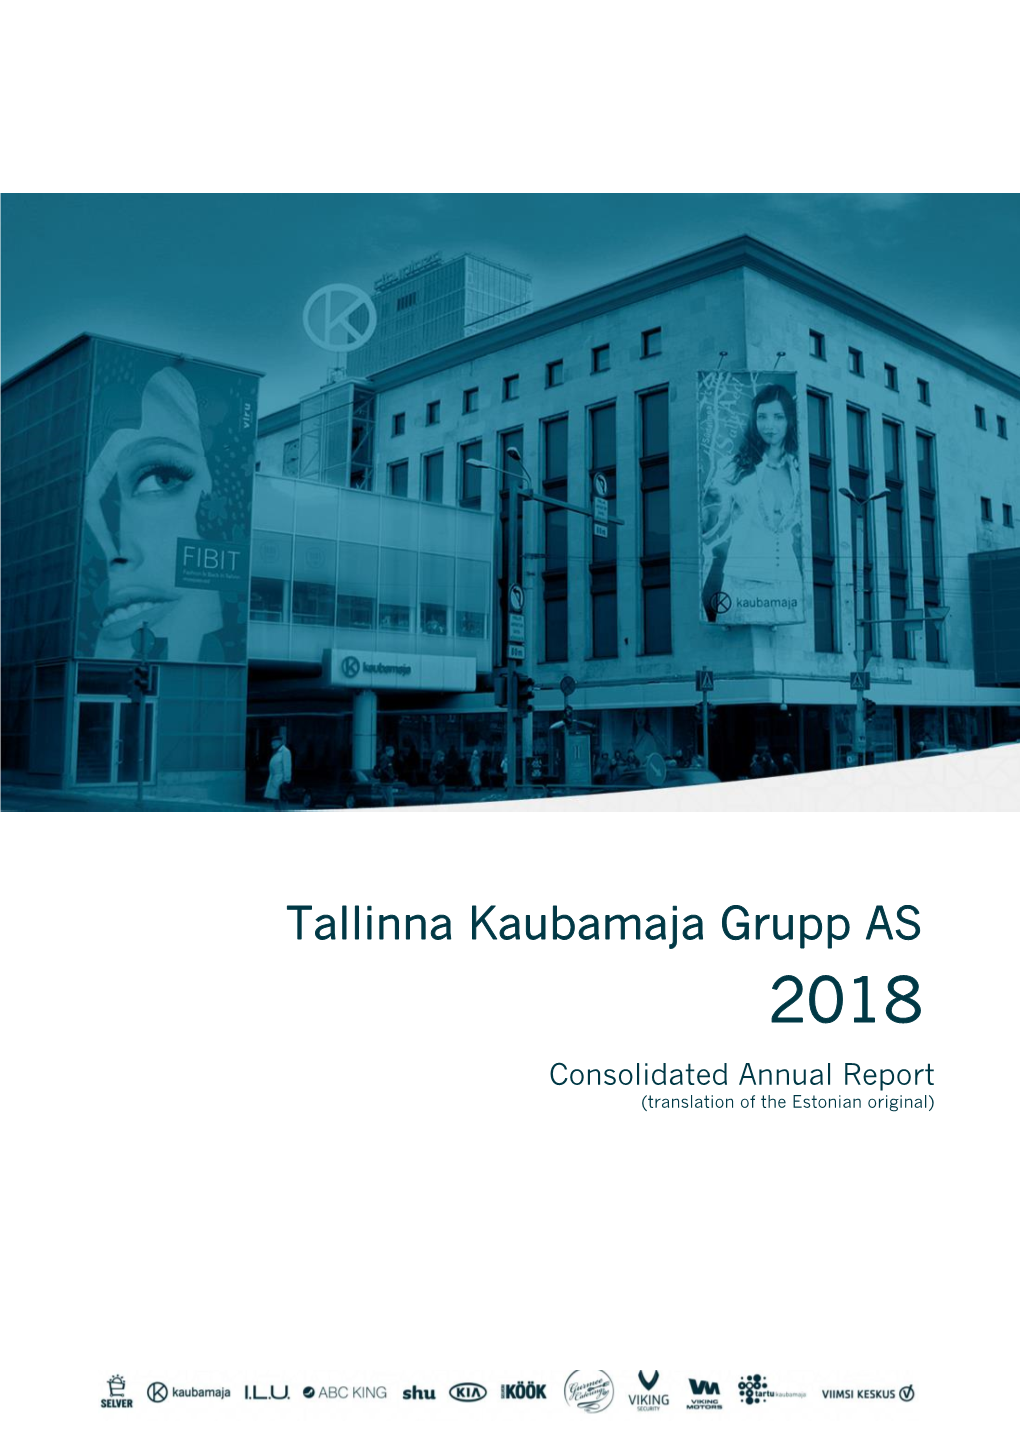 Tallinna Kaubamaja Grupp AS 2018 Consolidated Annual Report (Translation of the Estonian Original) TALLINNA KAUBAMAJA GRUPP AS CONSOLIDATED ANNUAL REPORT 2018